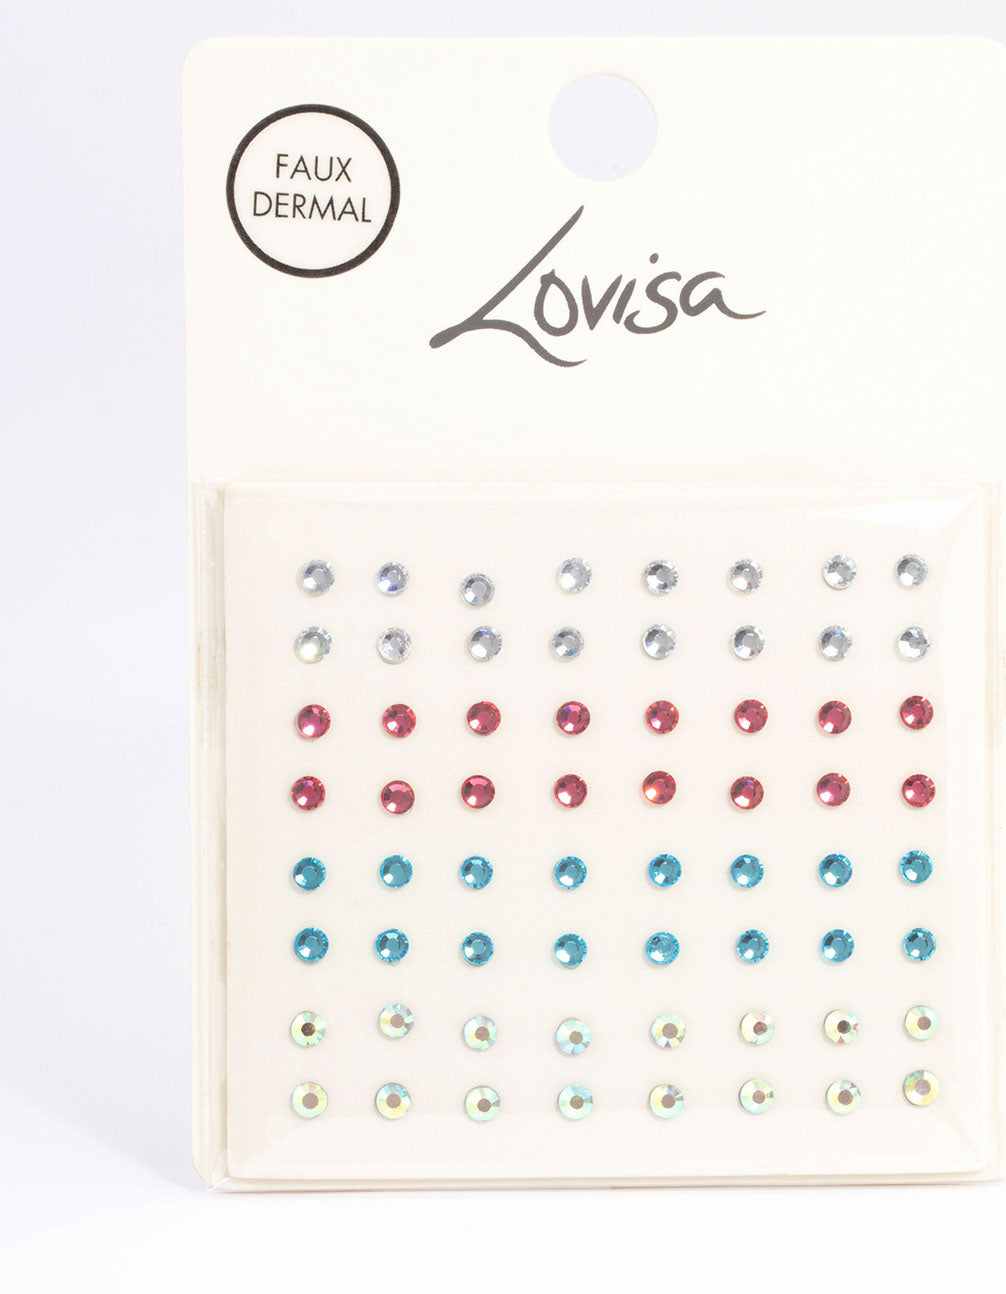 Colourful Statement Face Jewels - Lovisa